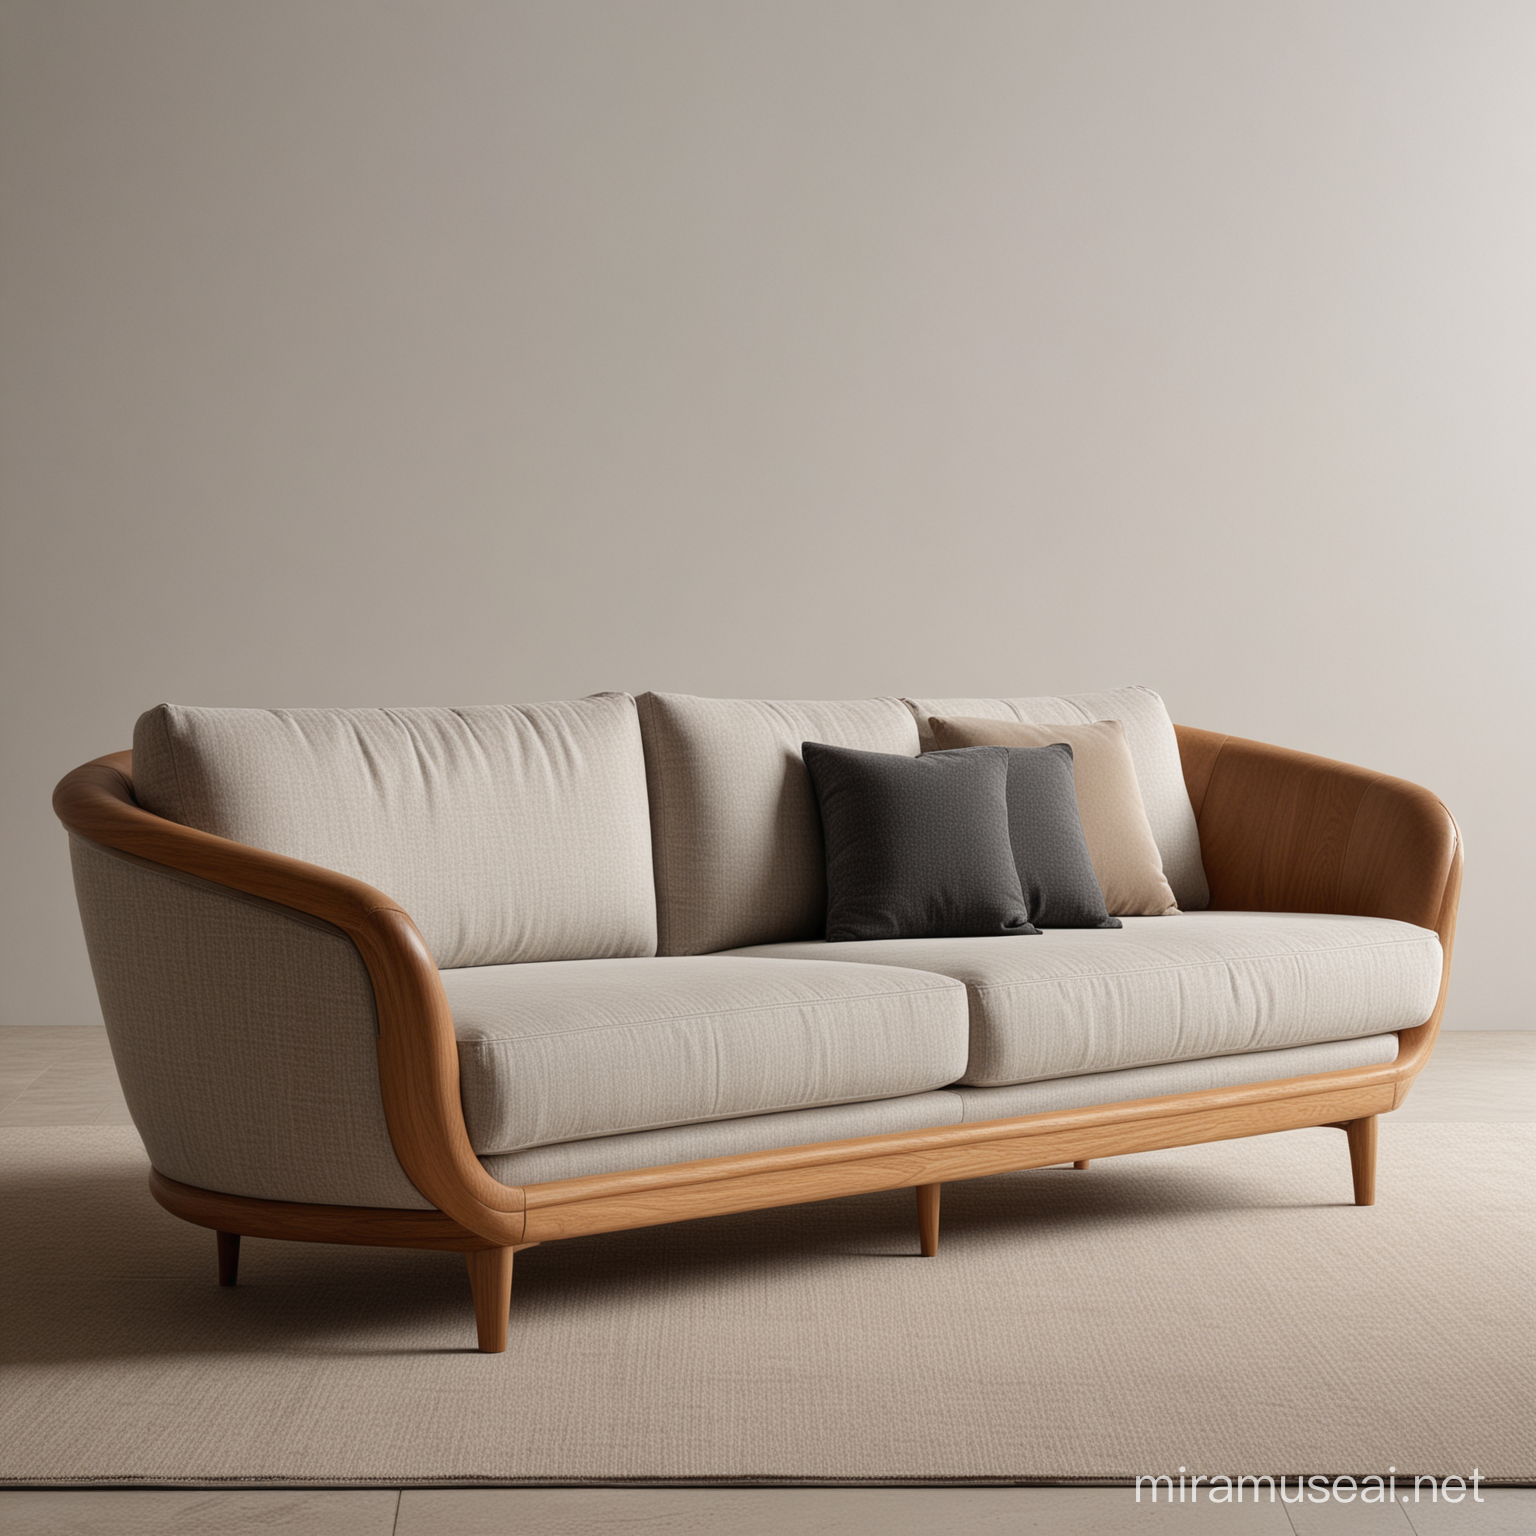 Elegant Italian Style PShaped Sofa with Minimalist Design